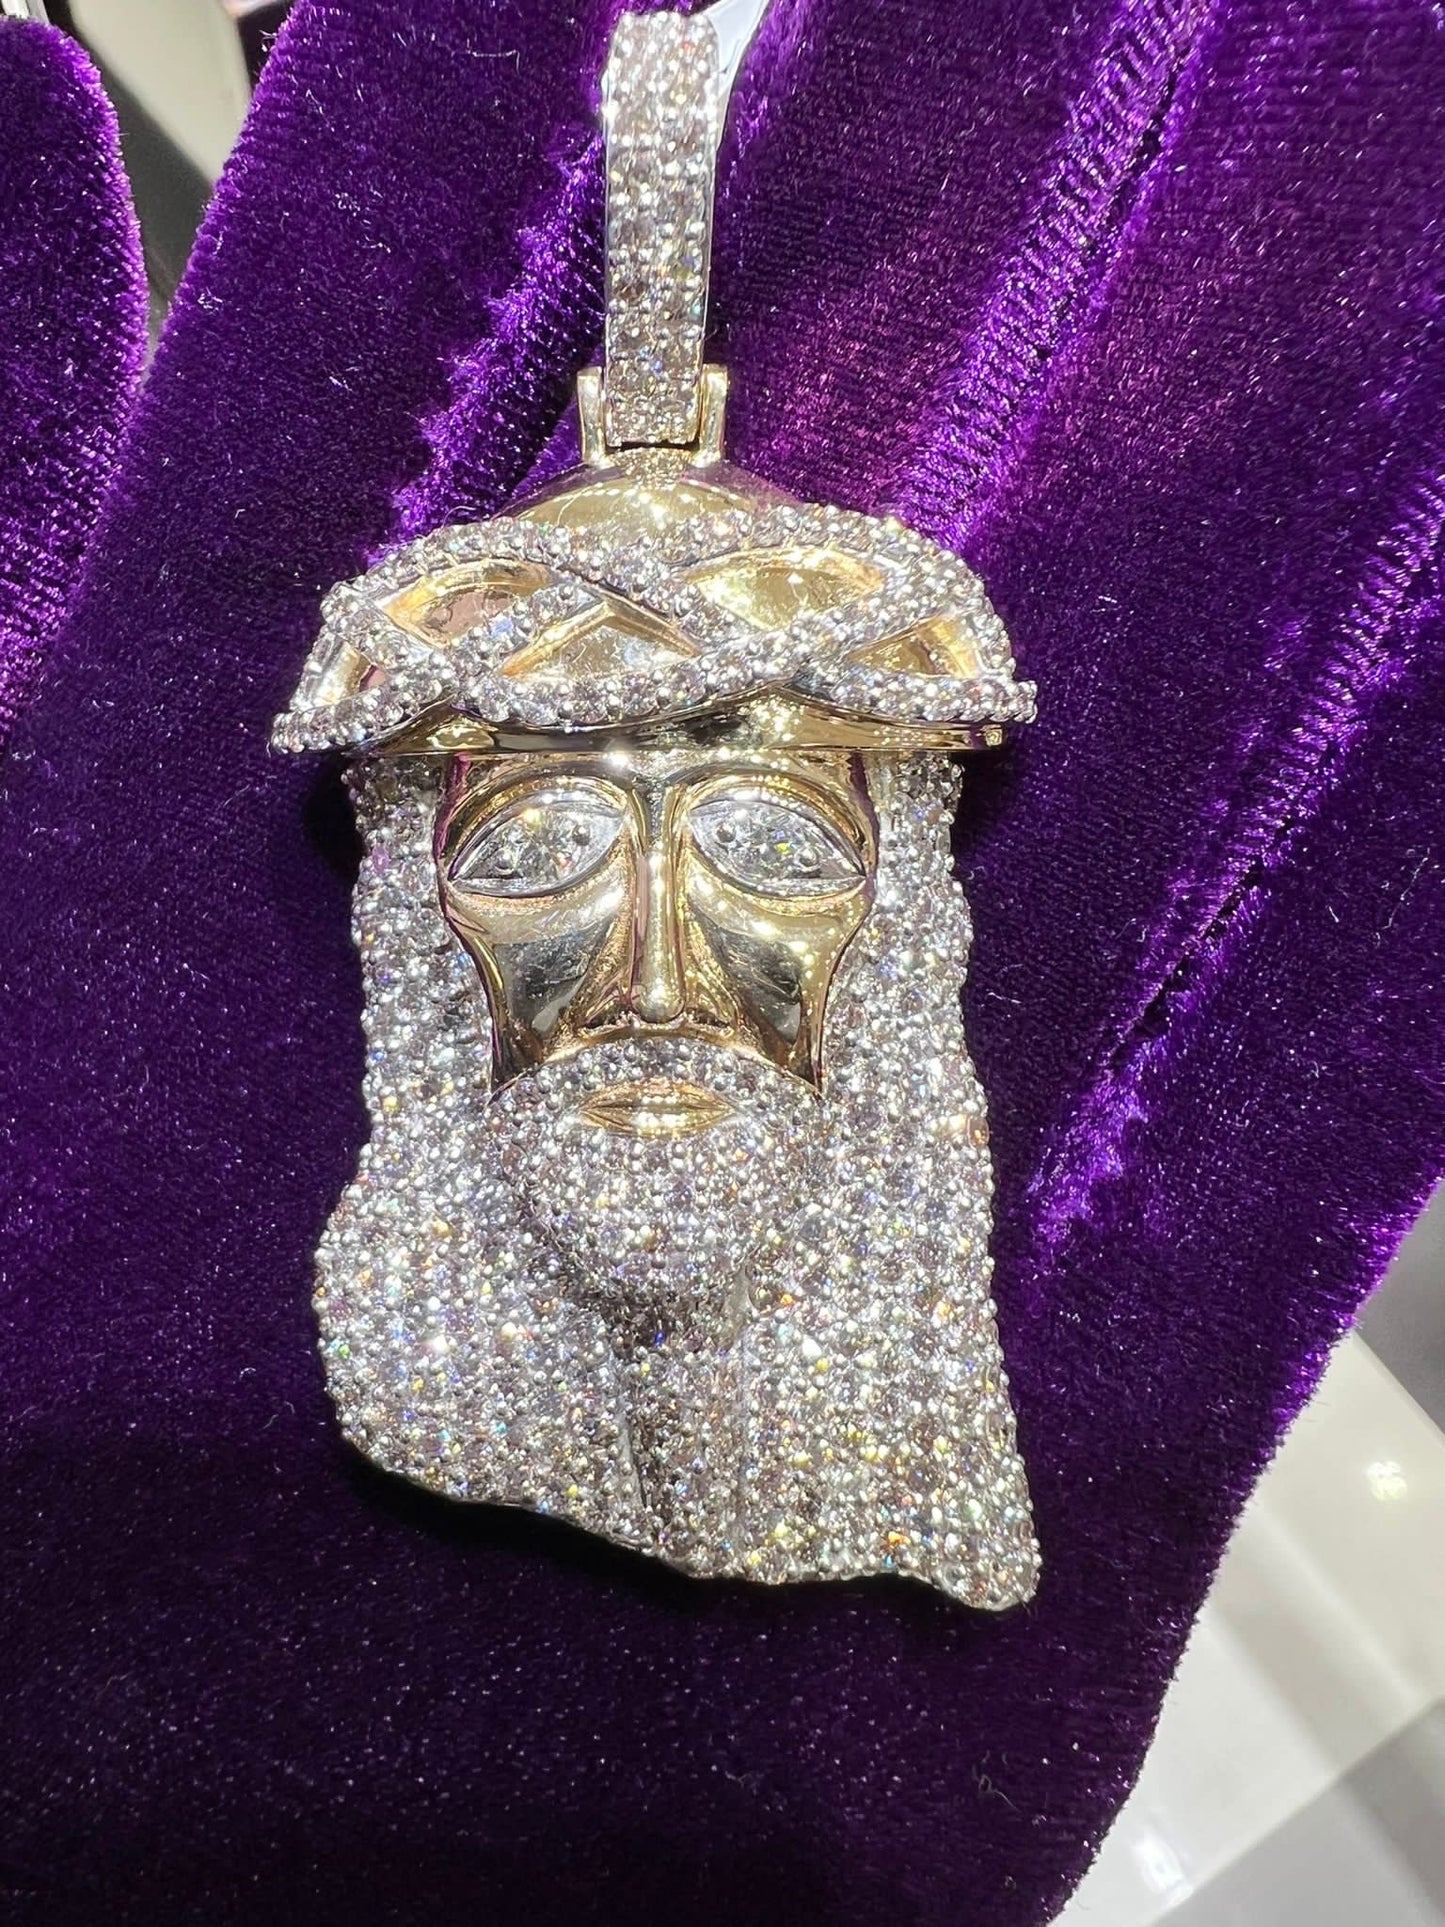 10k Gold and diamond Jesus pendant 7 carat with chain